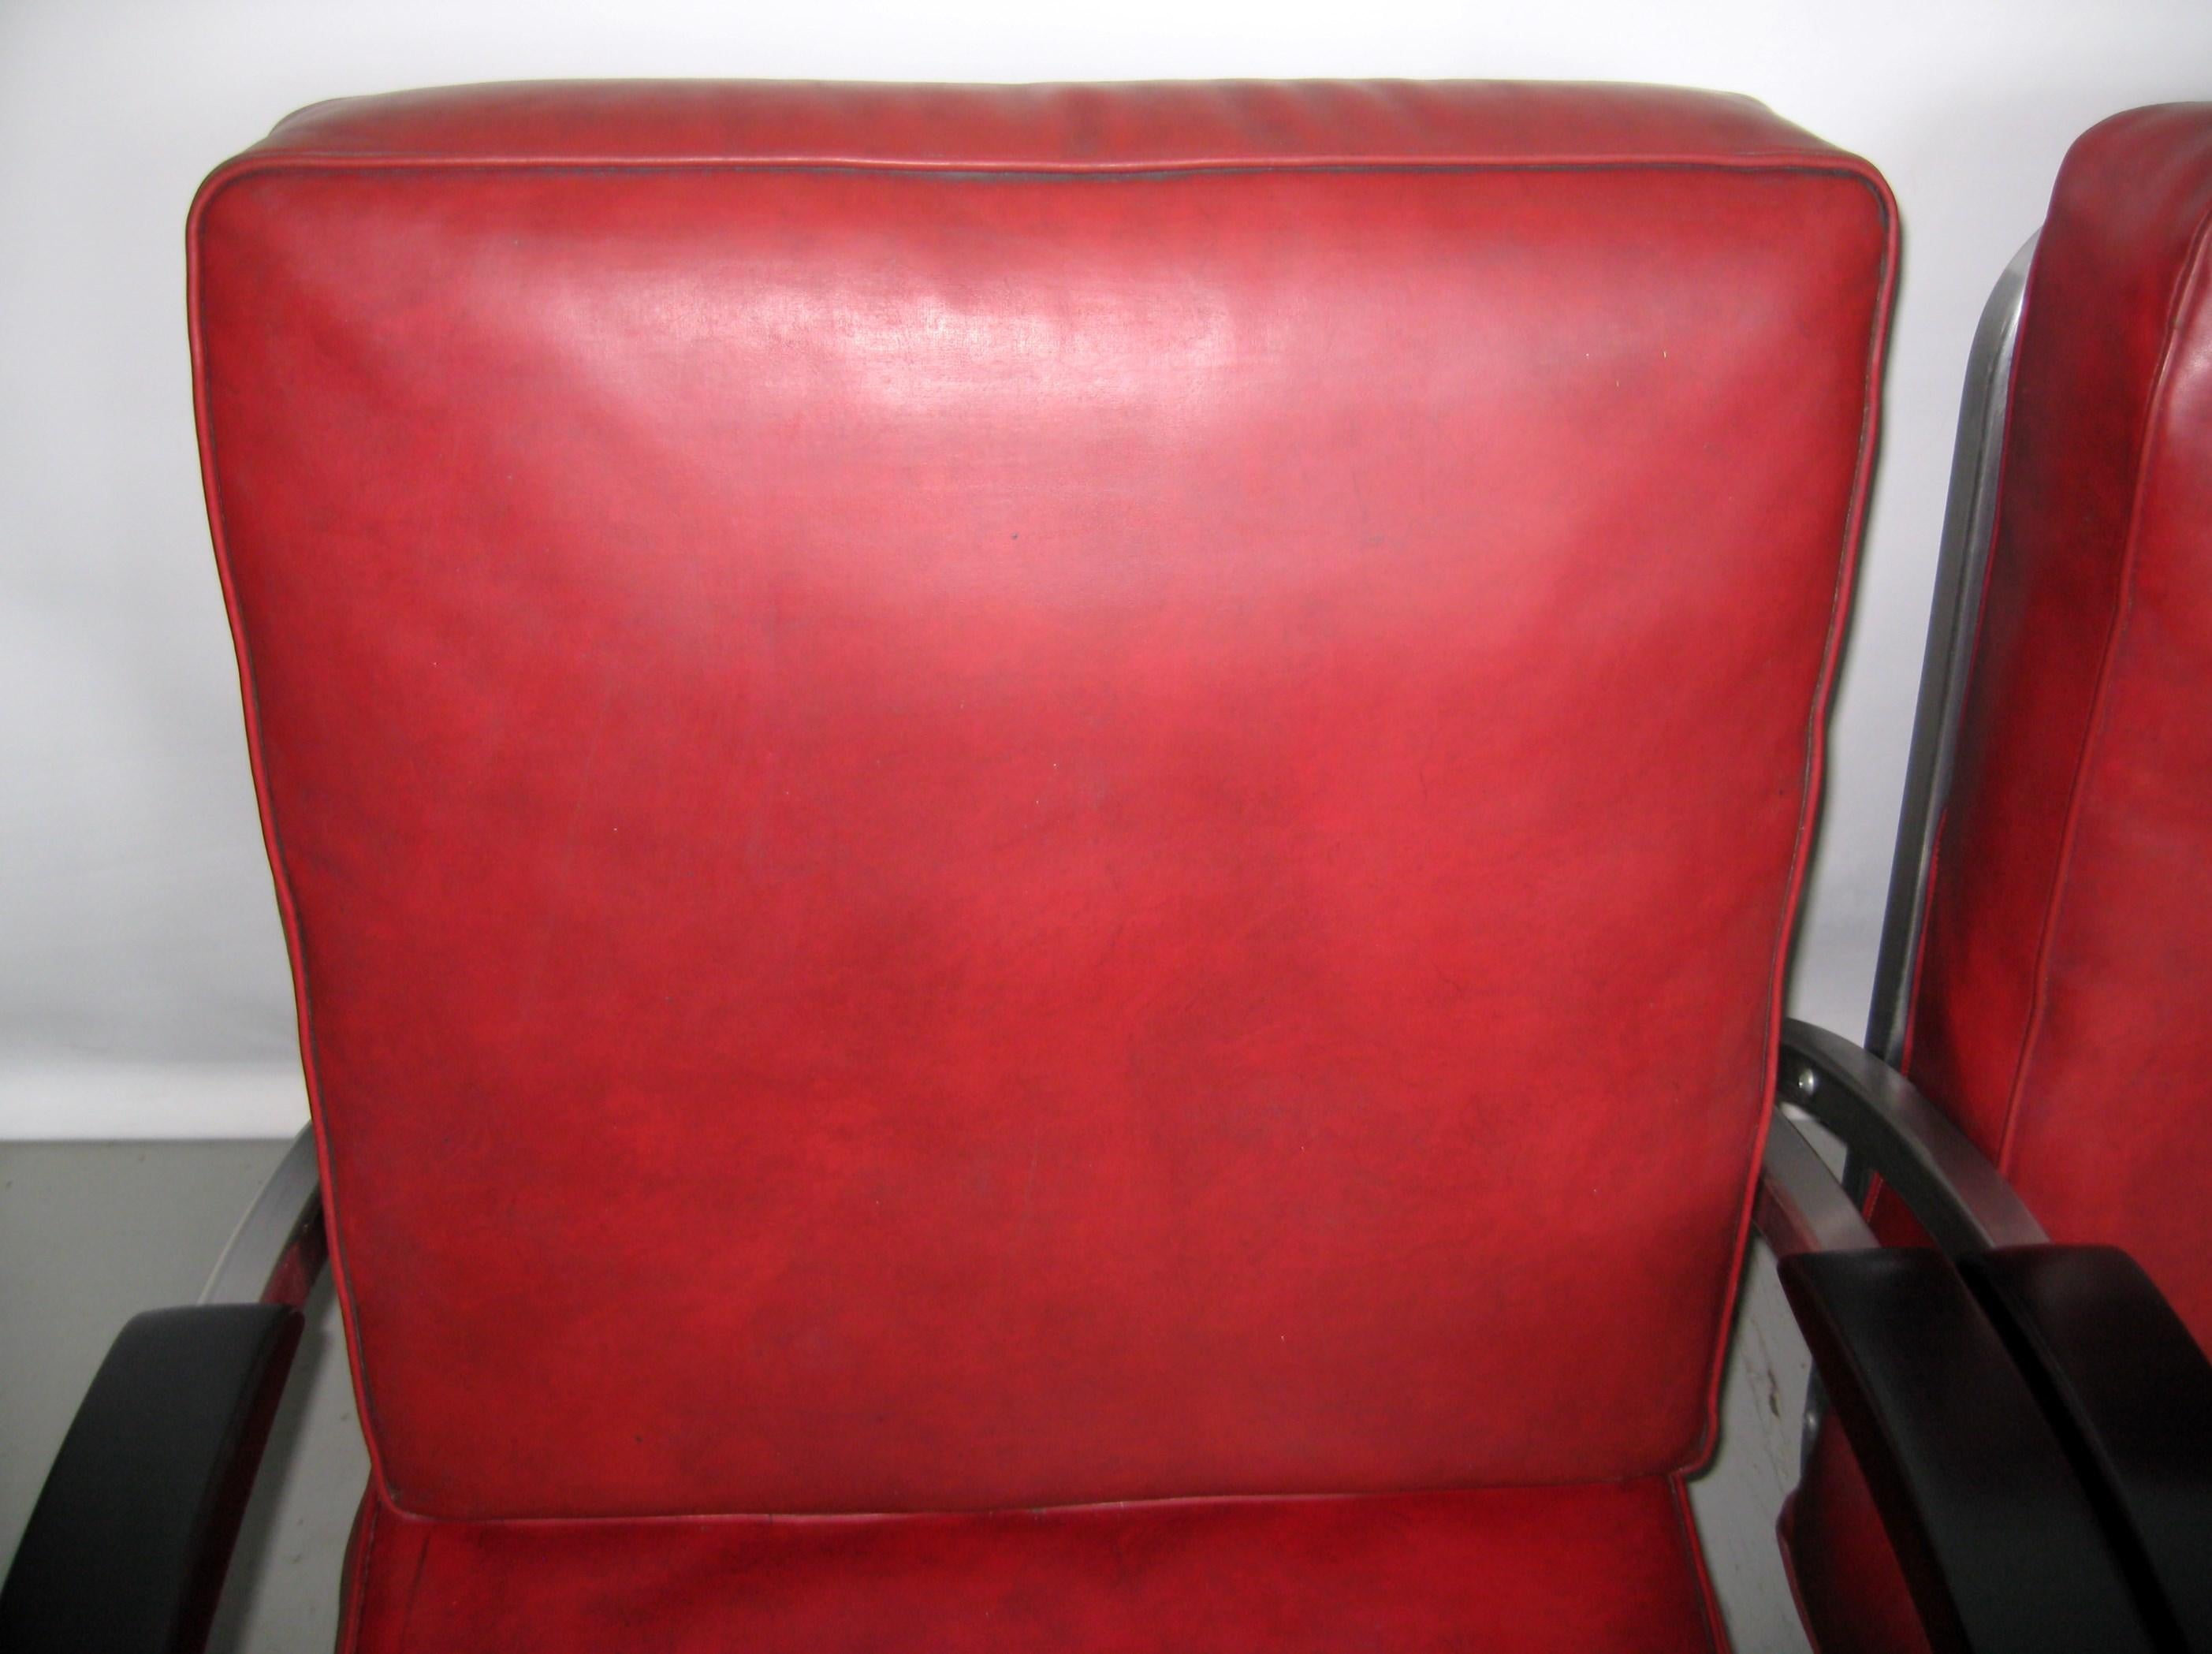 Art Deco Tubular Club Chair- Streamline Red  Royal Metal Manner of Gilbert Rohde 1